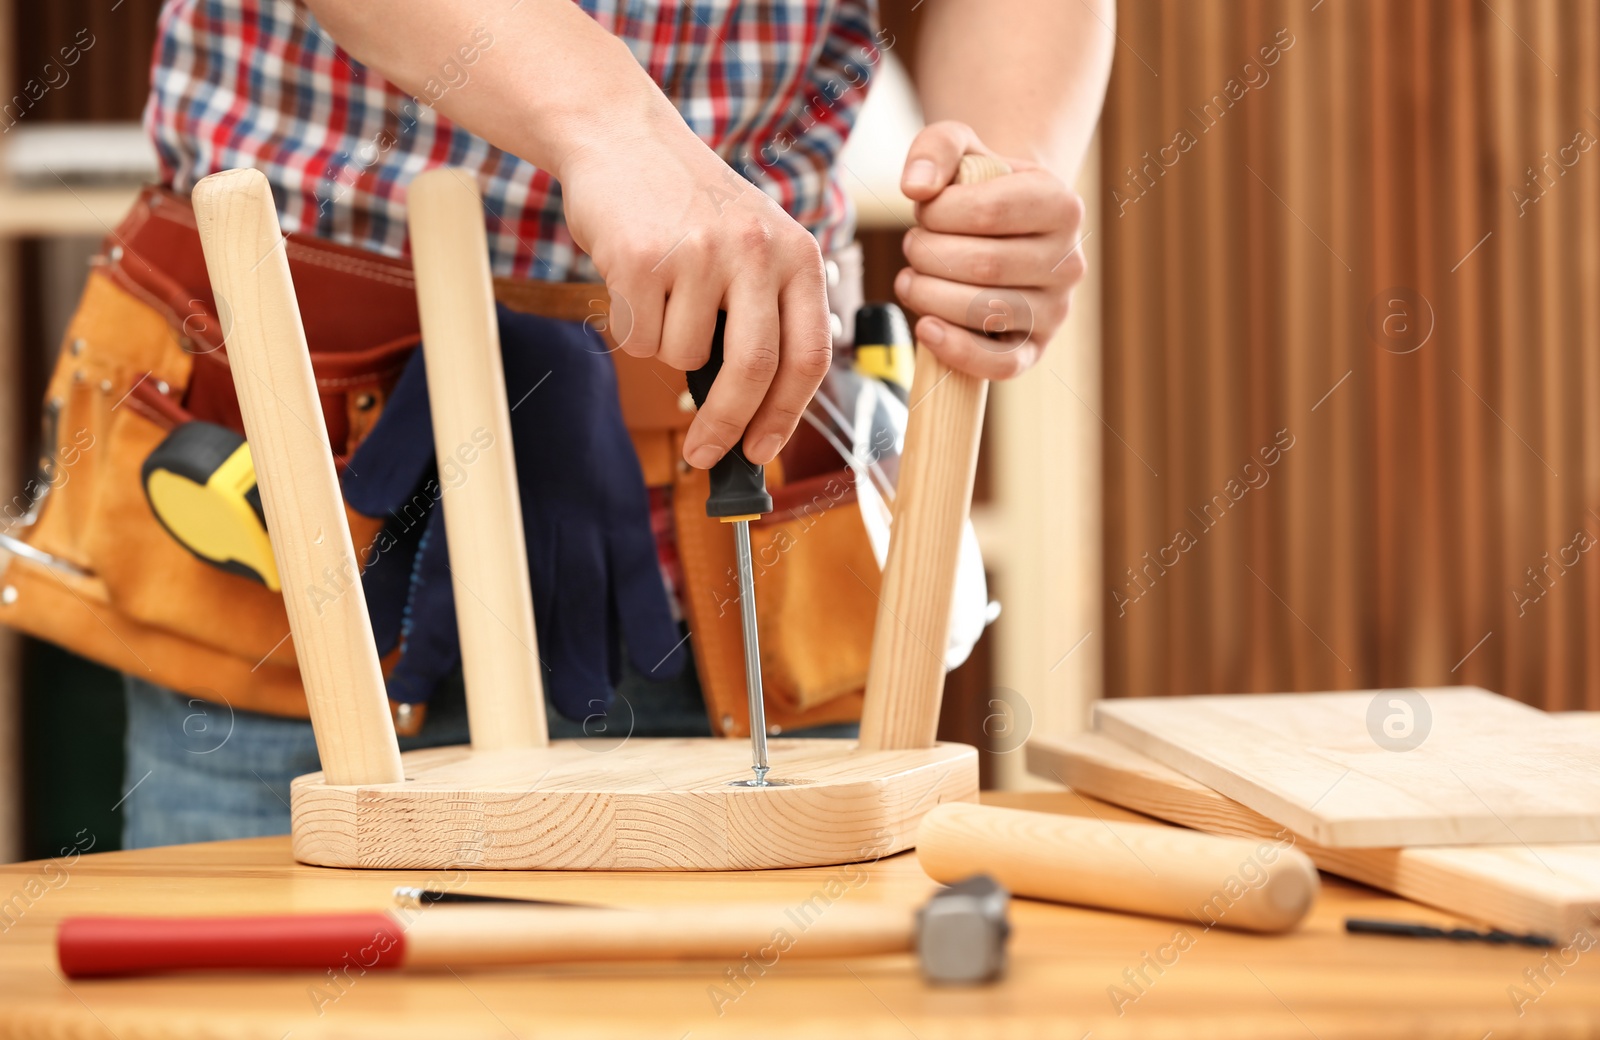 Photo of Young working man repairing wooden stool using screwdriver indoors, closeup